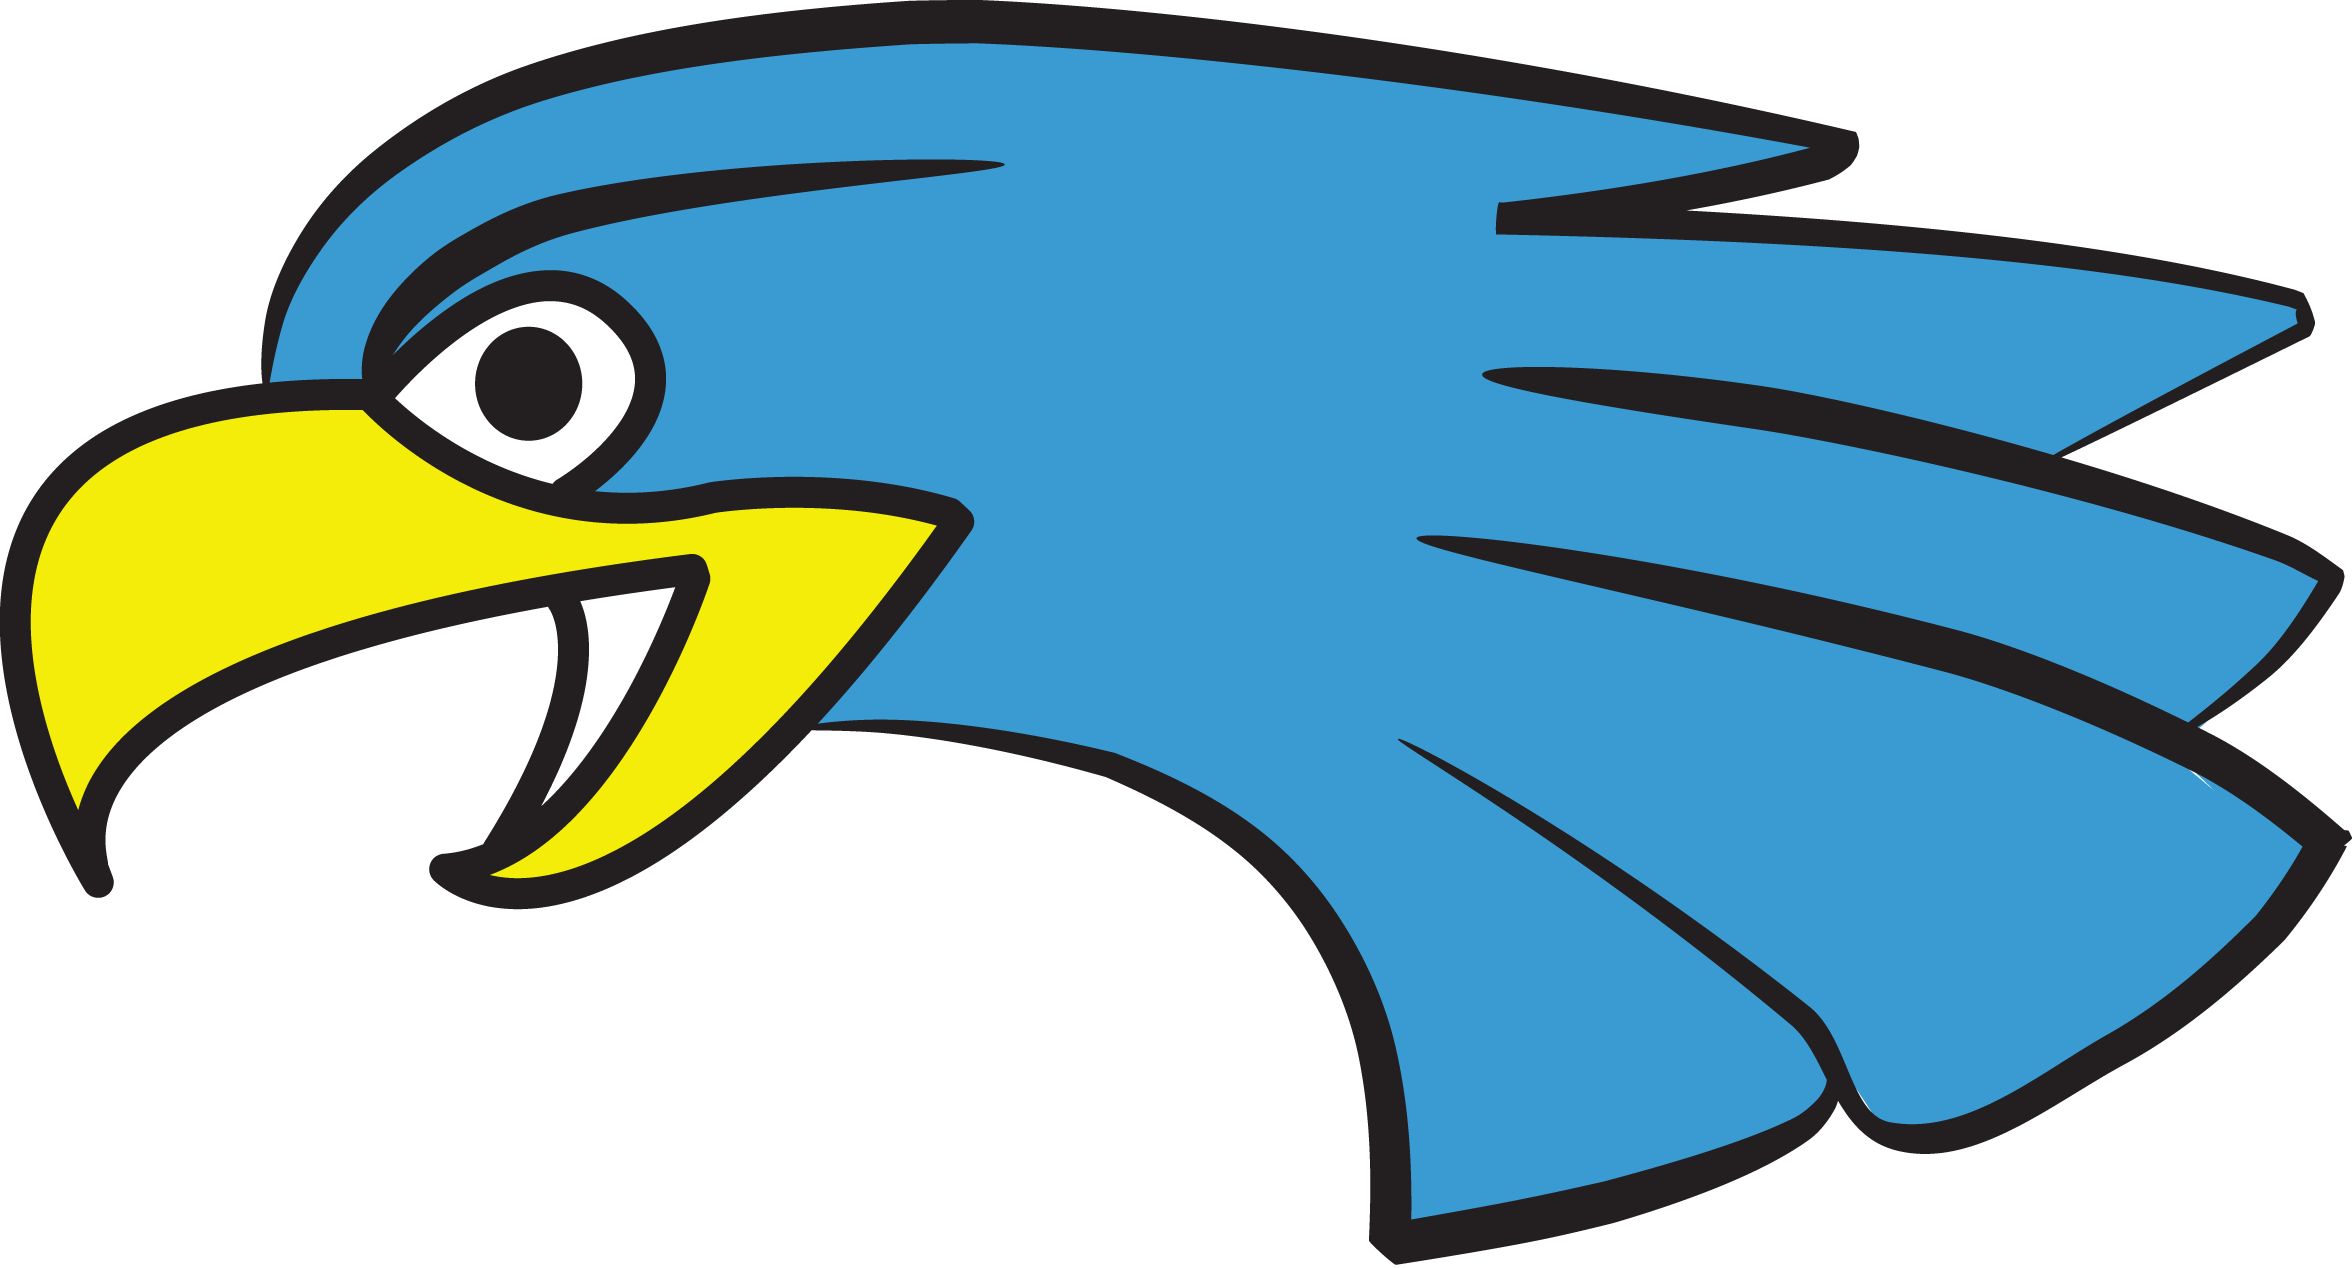 Eagle-head - Wc Eagles Logo (2352x1268)